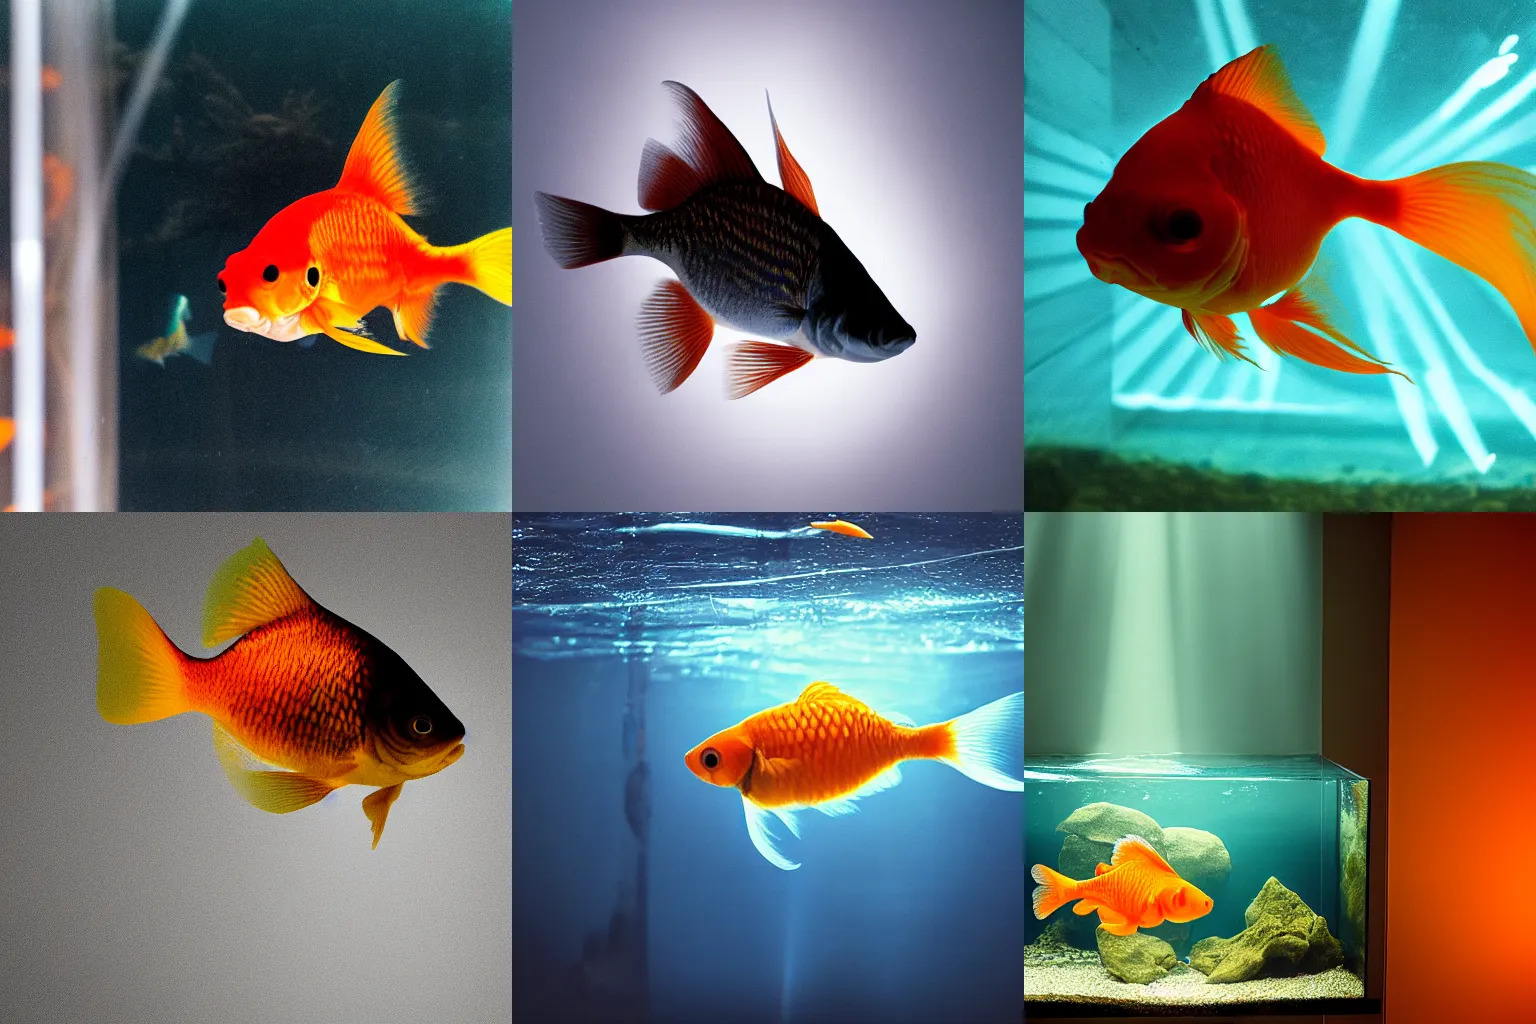 Prompt: A goldfish inside an aquarium, light rays, studio light